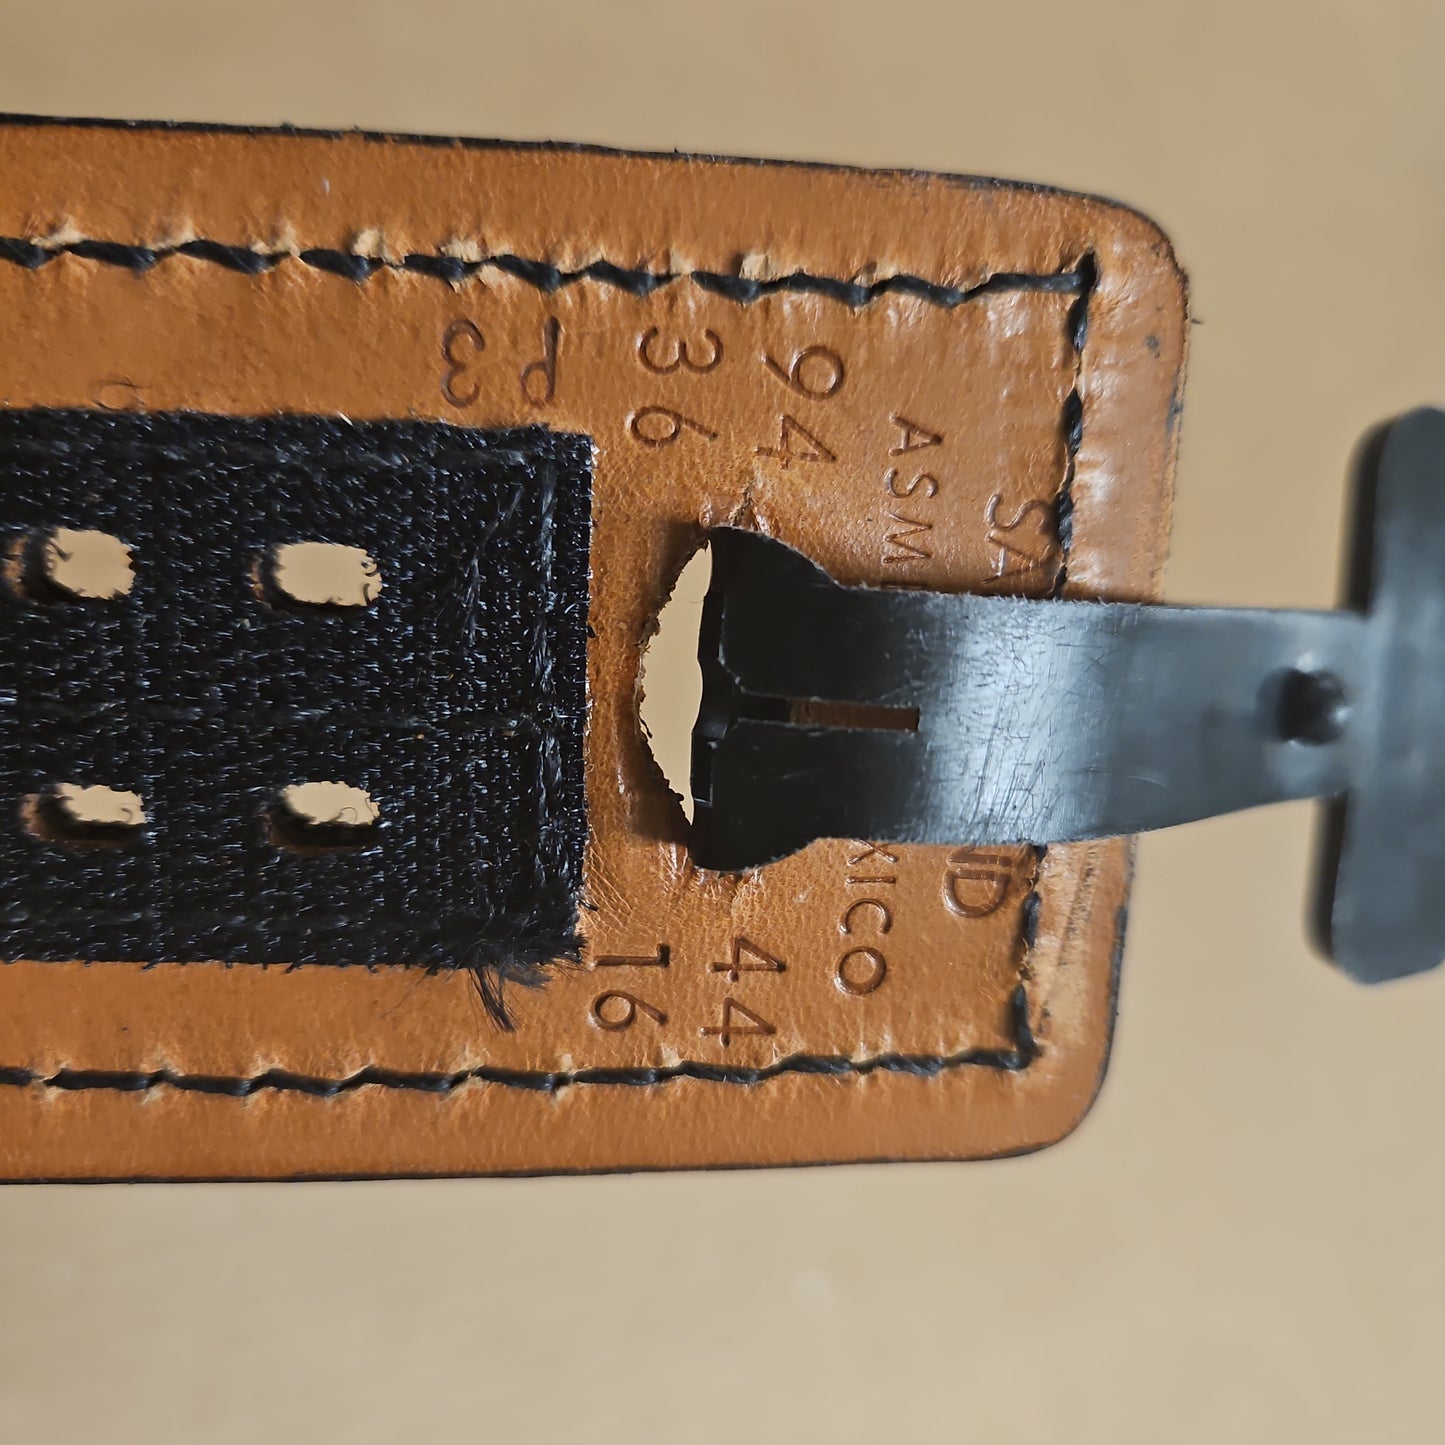 Safariland Duty Belt Model 94 Plain Black Waist 44 Hook and Loop No Buckle